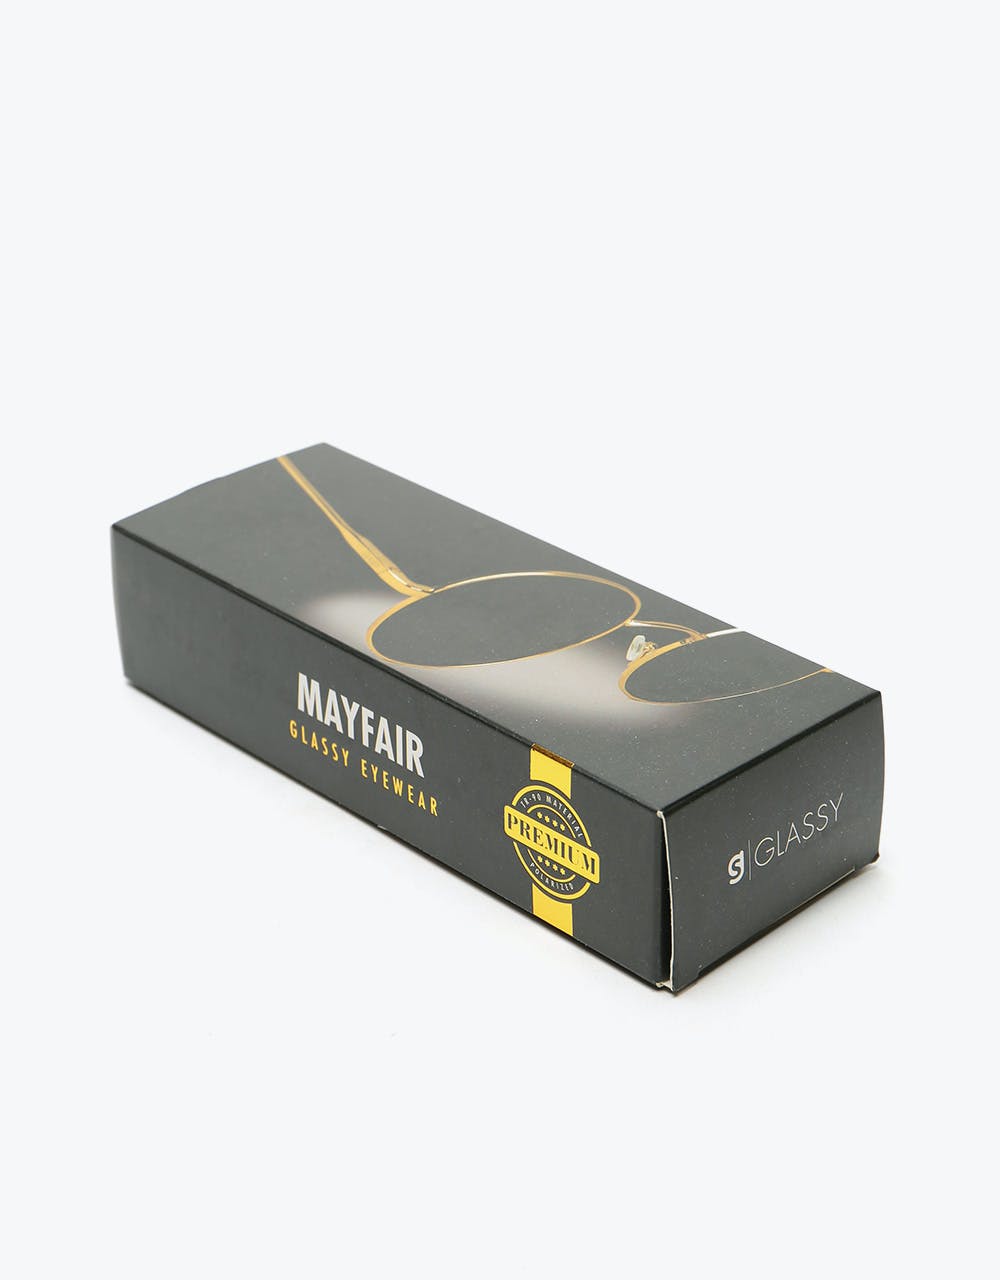 Glassy Sunhater Mayfair Premium Polarised Sunglasses - Gold